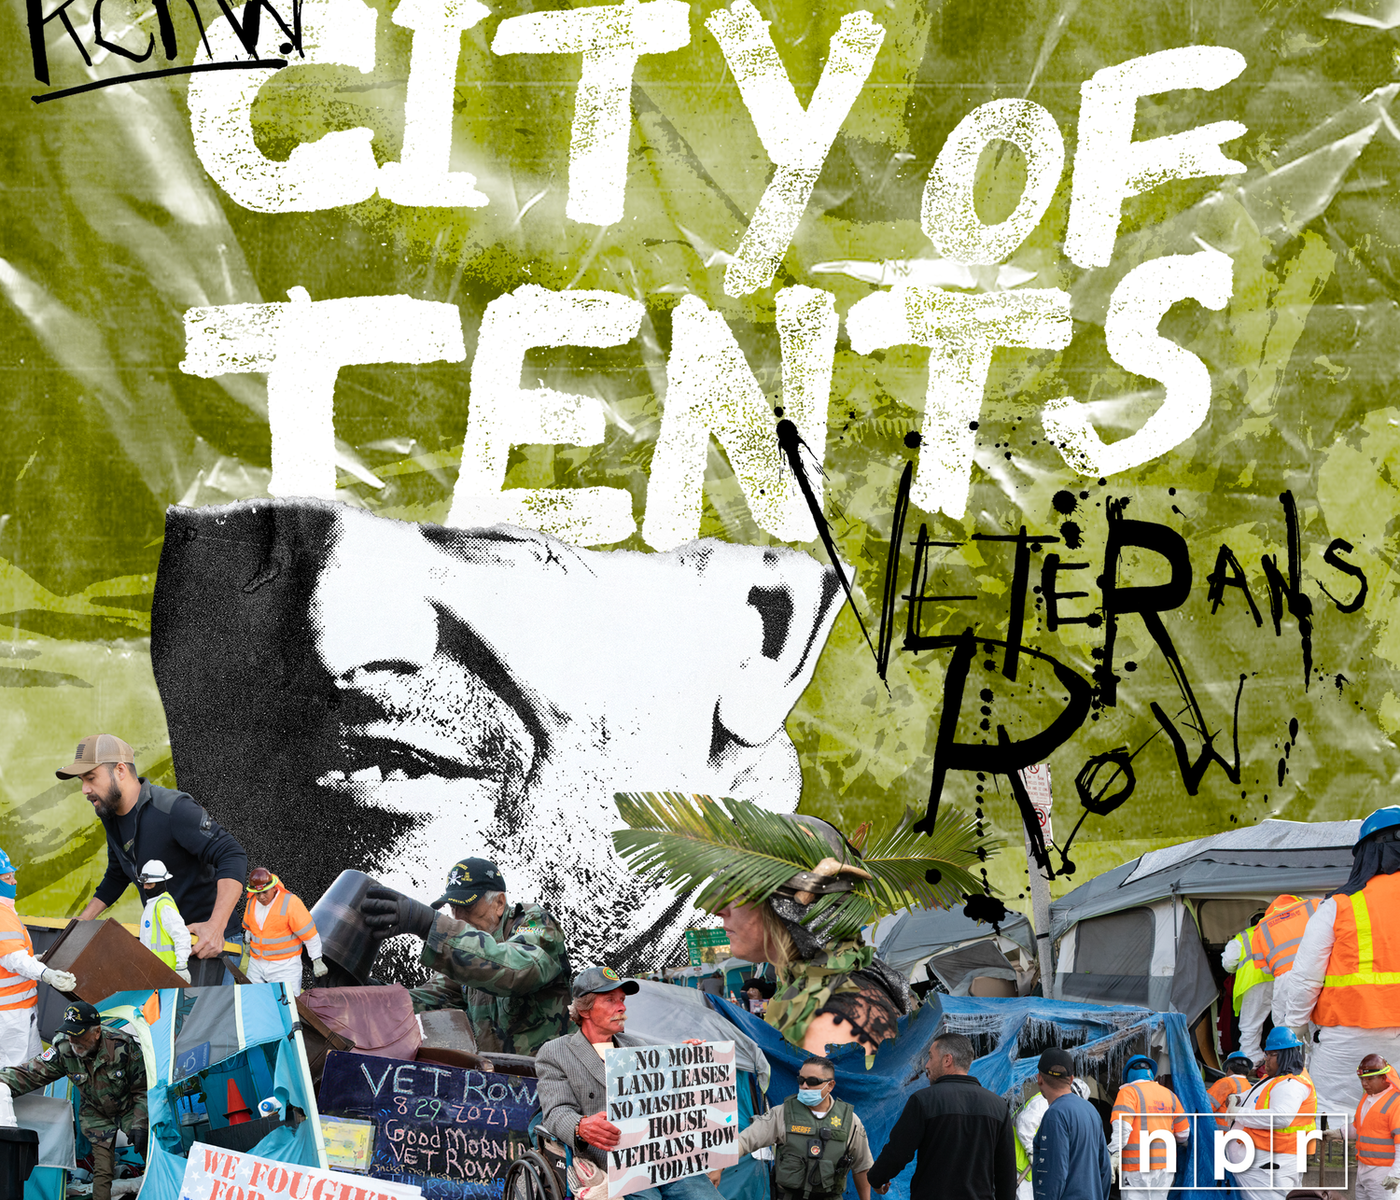 City of Tents Logo